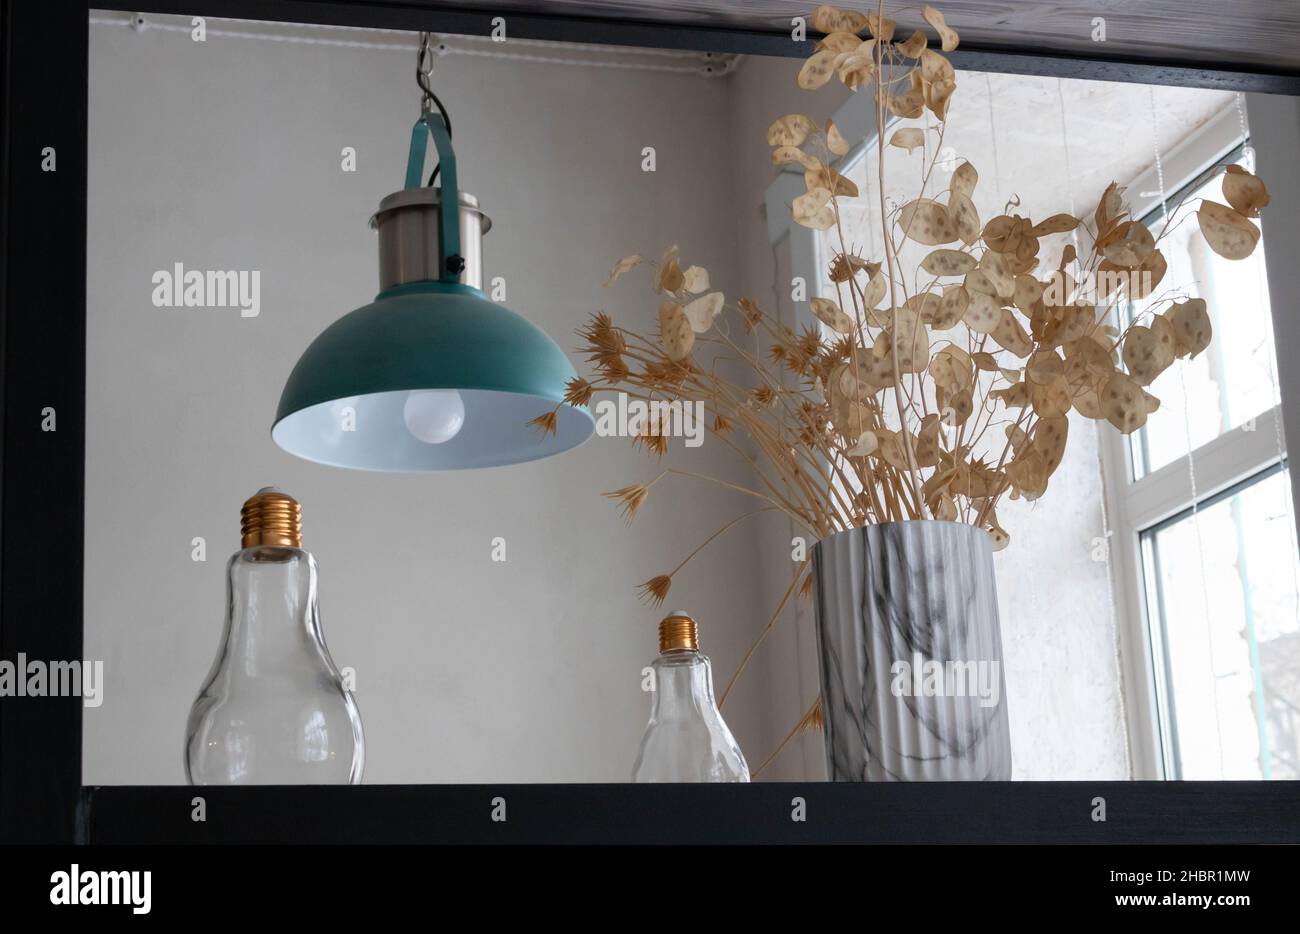 Ceiling blue pendant lamp. Decorative lamps on the shelf, home improvement technology. Stock Photo